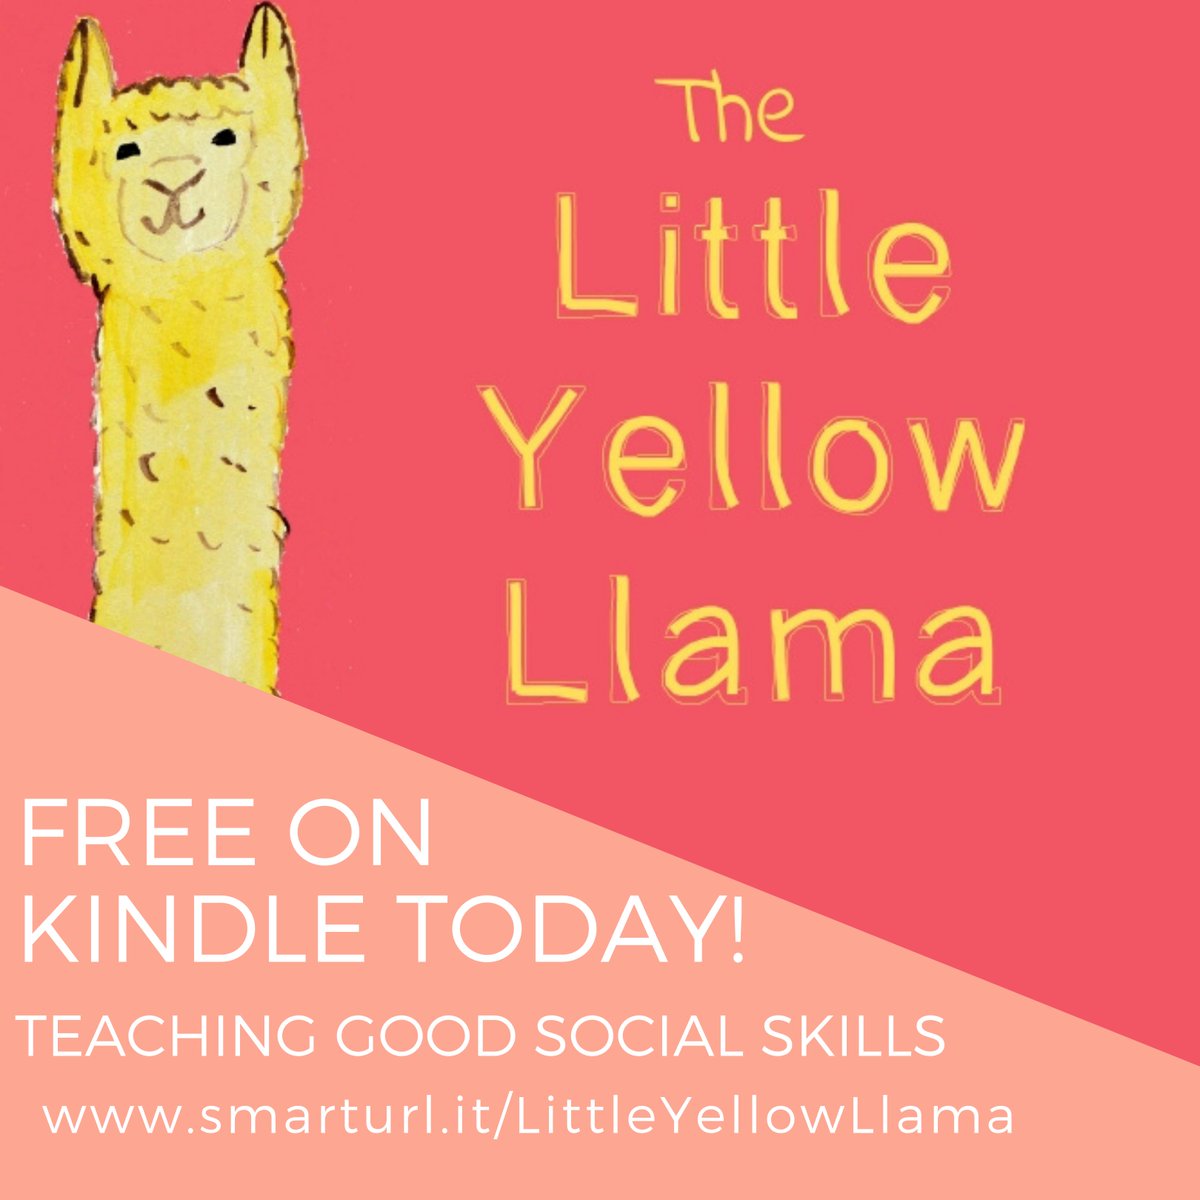 My new children's book The Little Yellow Llama is free on Kindle today! Reviews would be awesome! smarturl.it/littleyellowll… #llamabook #childrensbook #Kindle4kids #freekindlebook #storytimethread #newrelease #kidlit #writersworld #preschoolteachers #SAHM #authorblogger #hsblogger